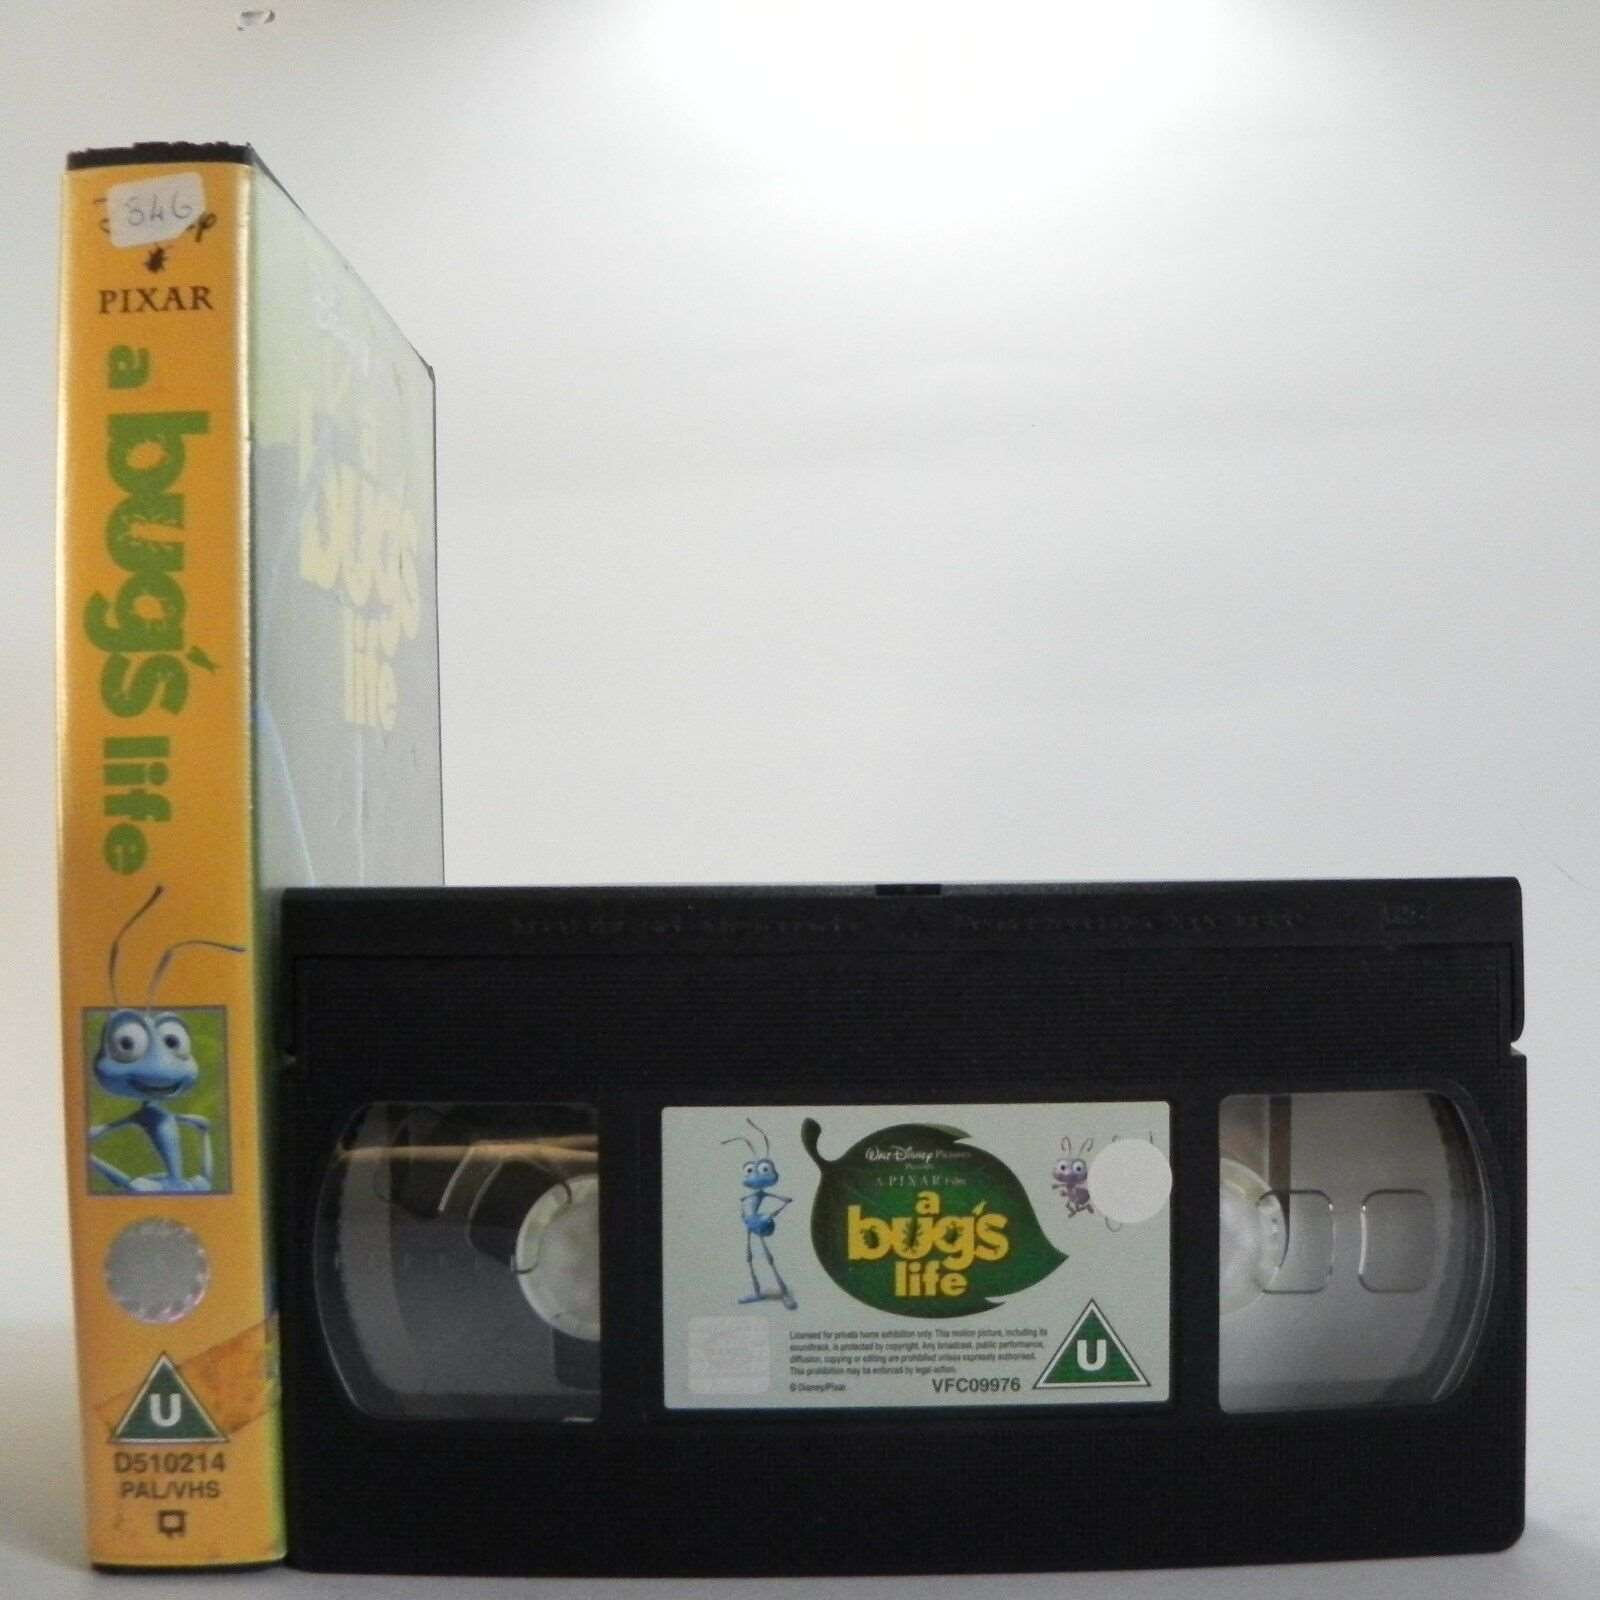 A Bug's Life - Large Box - Disney/Pixar - Animated - Children's/Family - VHS-